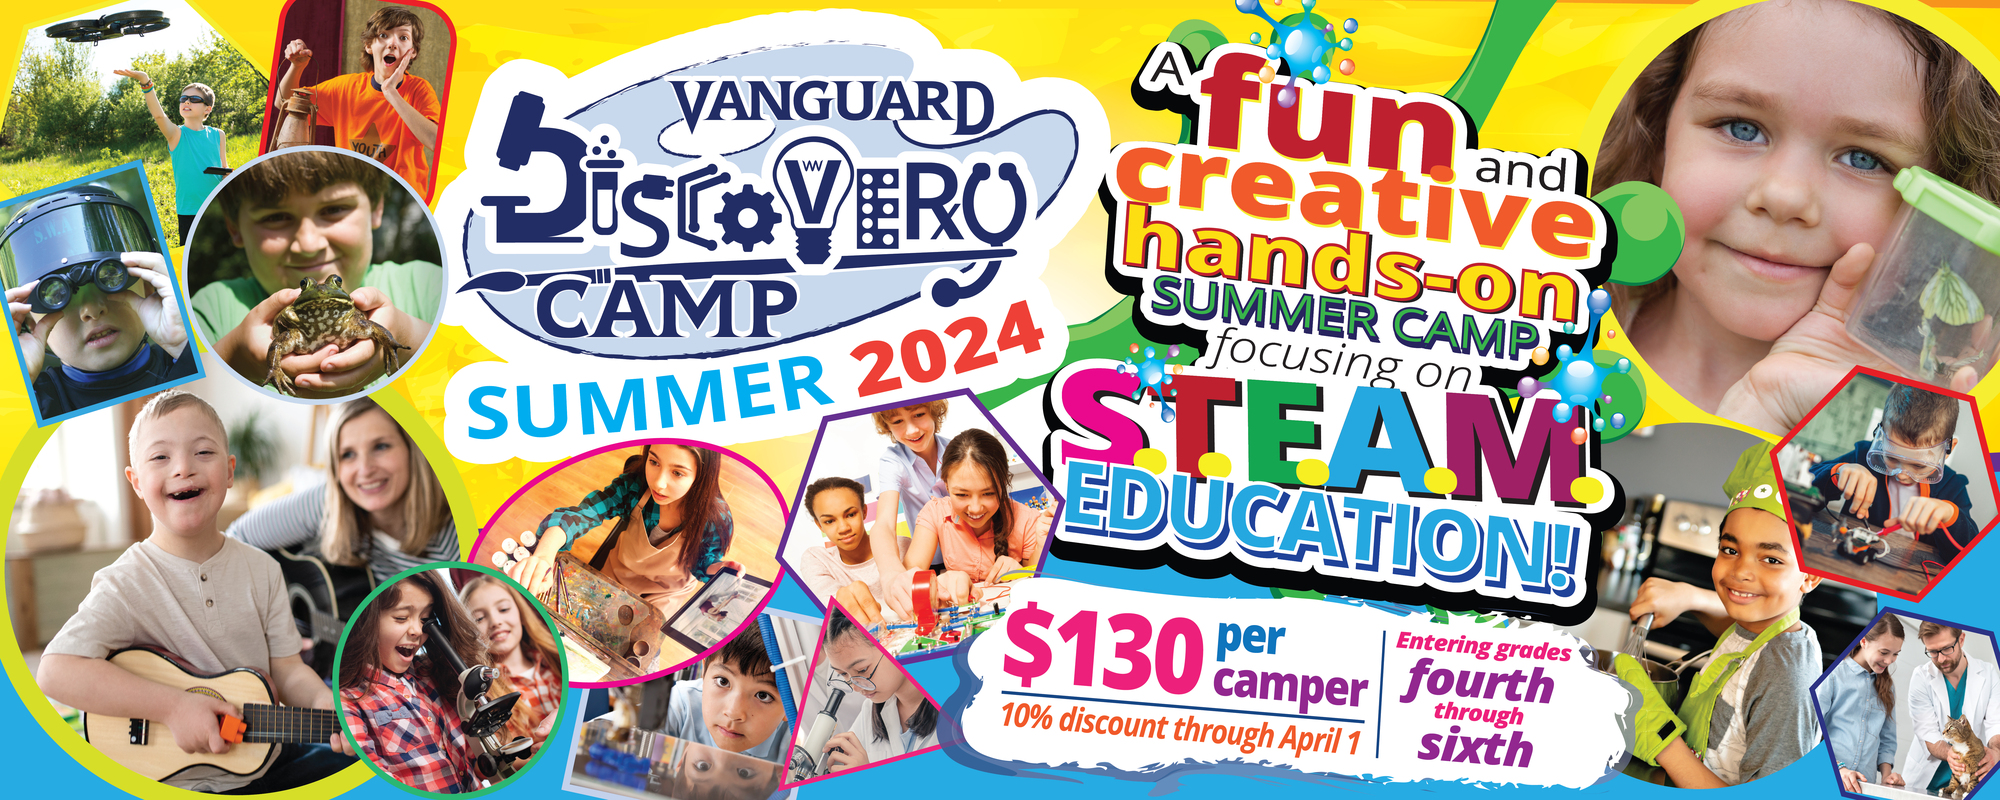 Vanguard Discovery Camp